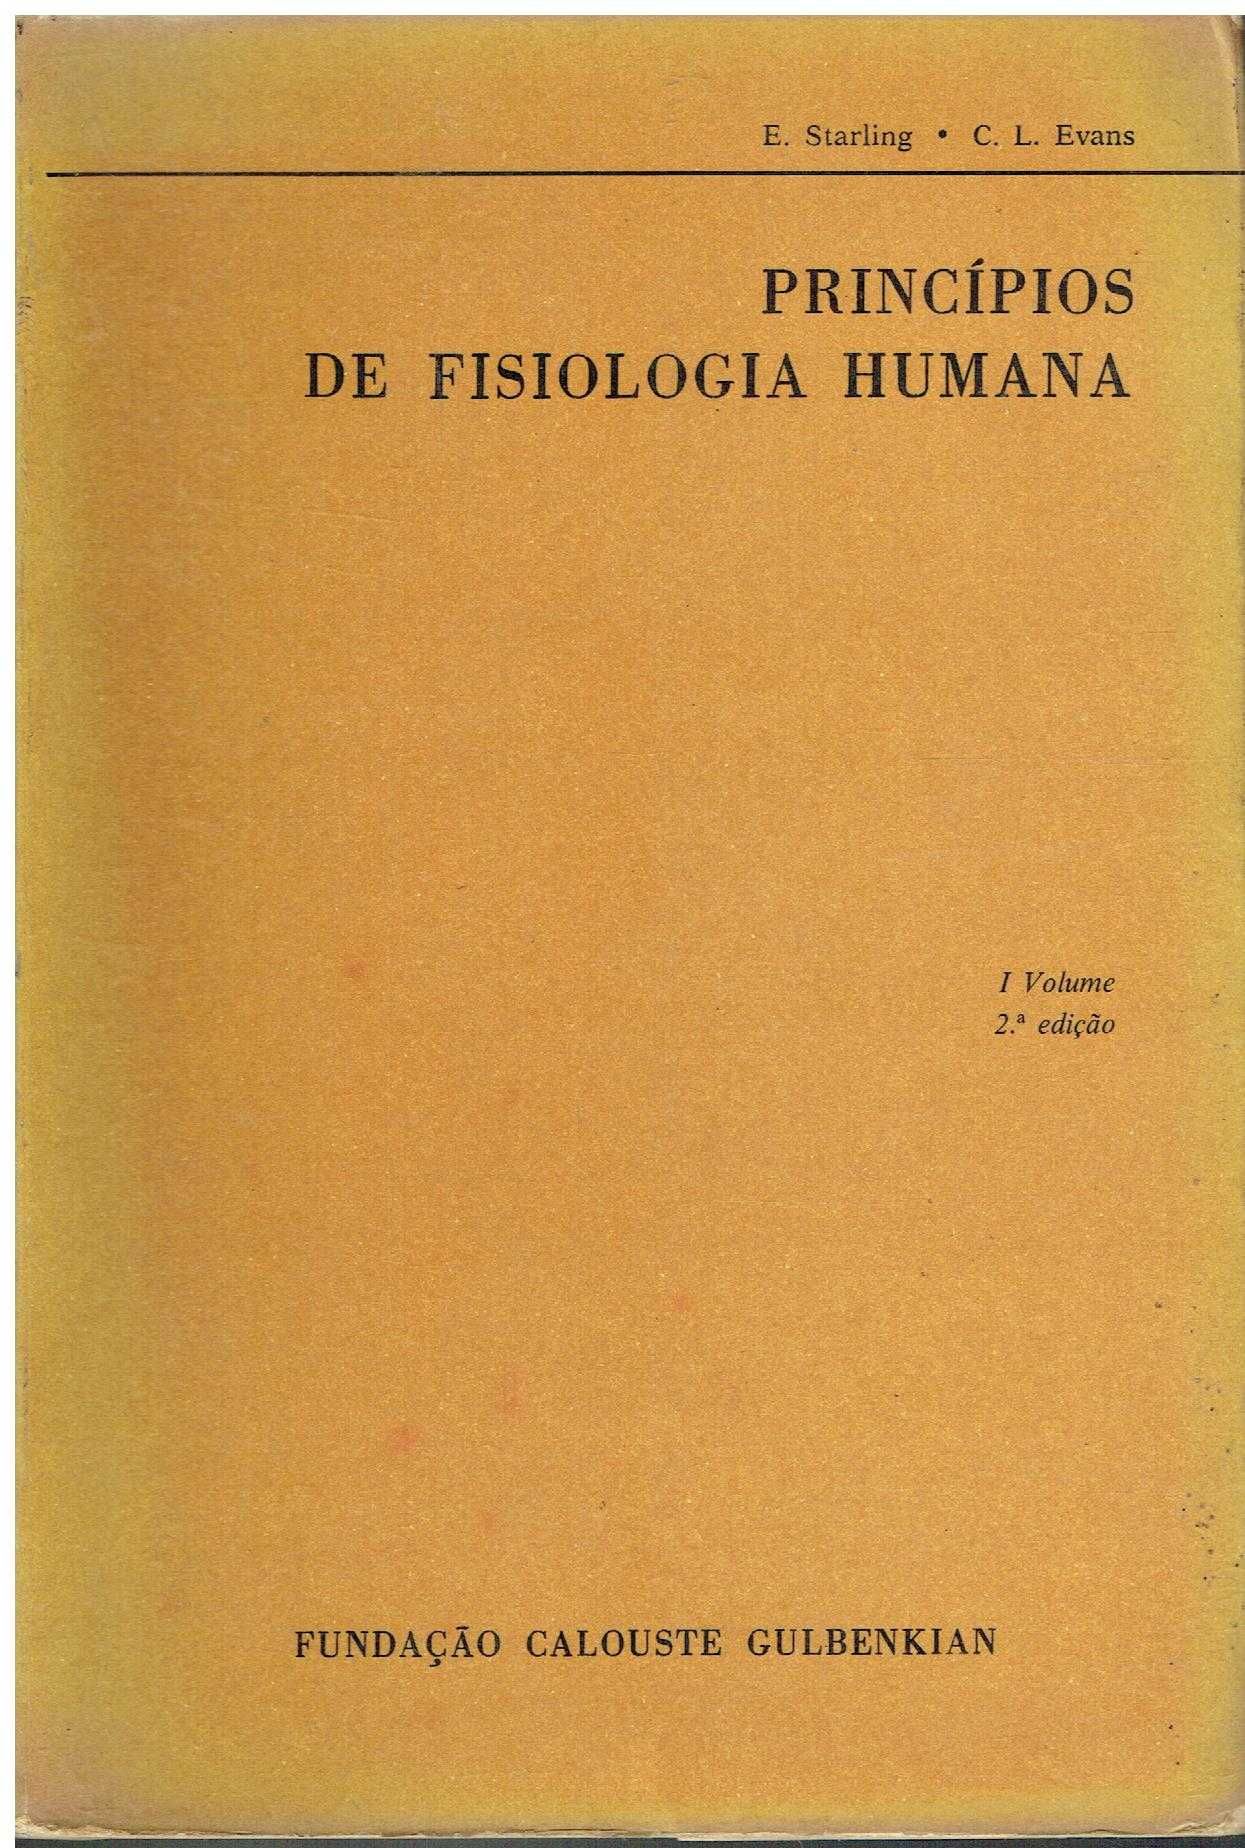 7453
	
Princípios de fisiologia humana - 1º Vol. 
de E. Starling